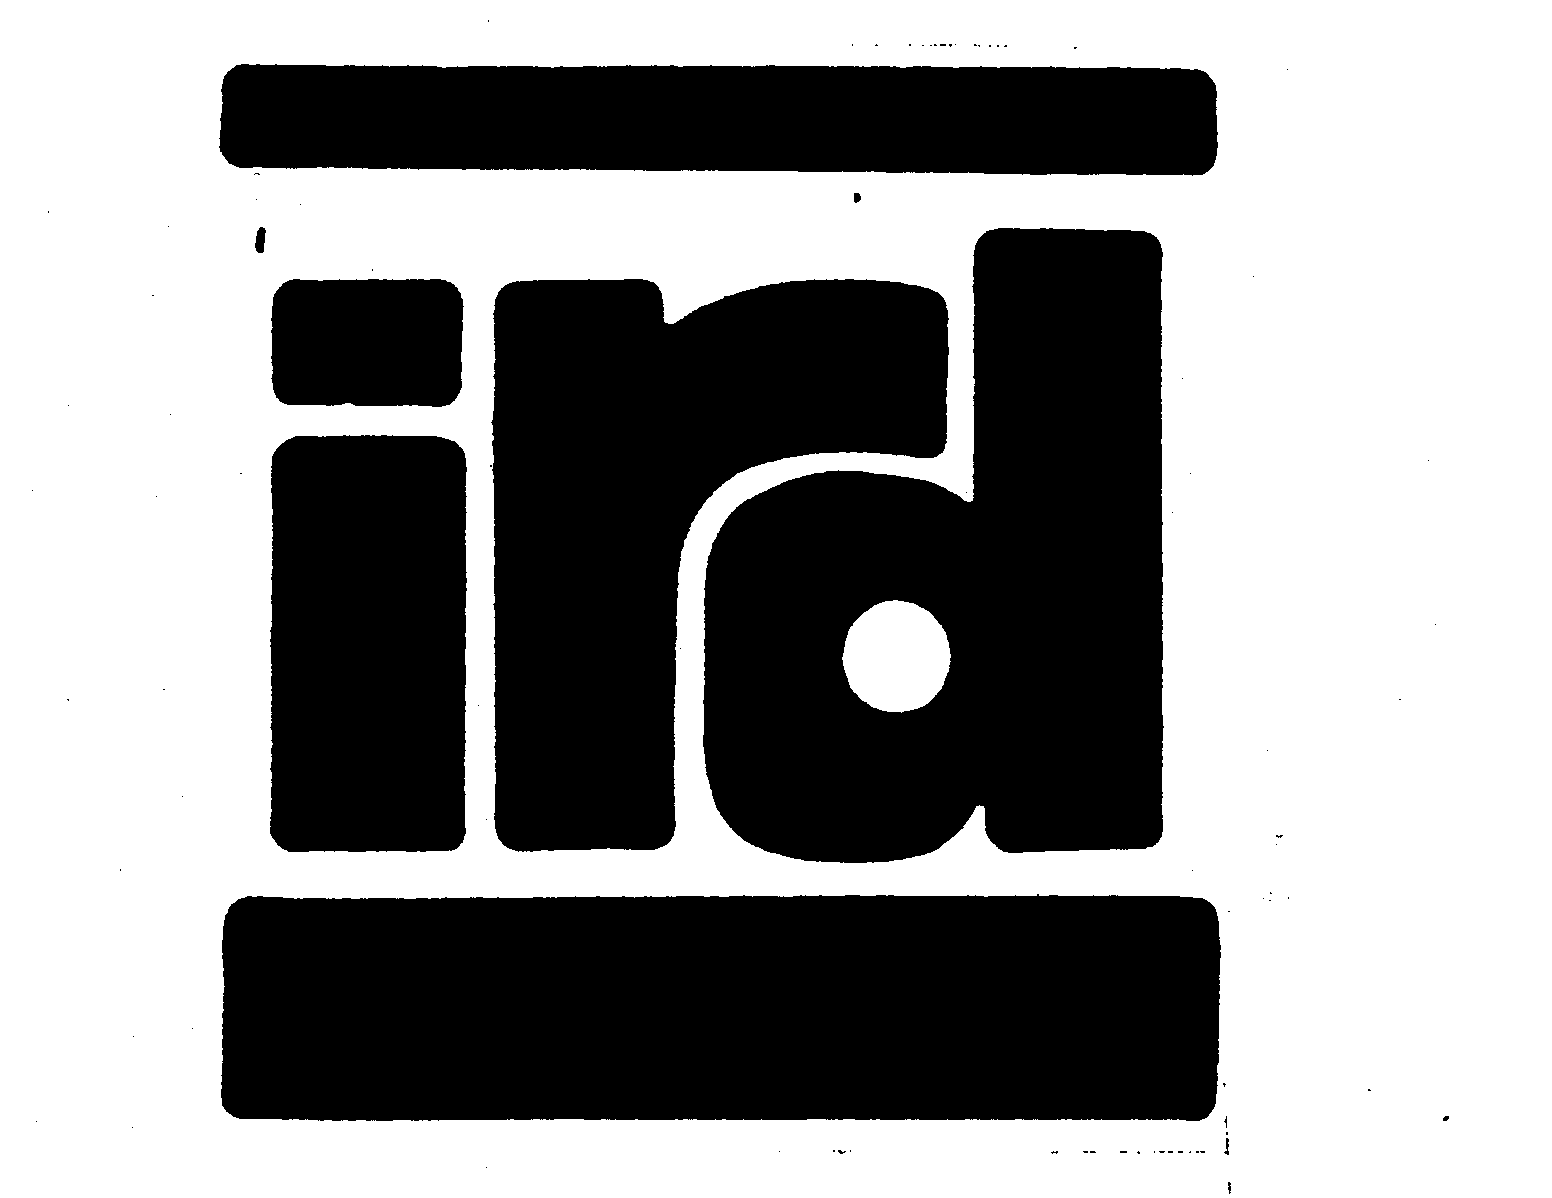 IRD